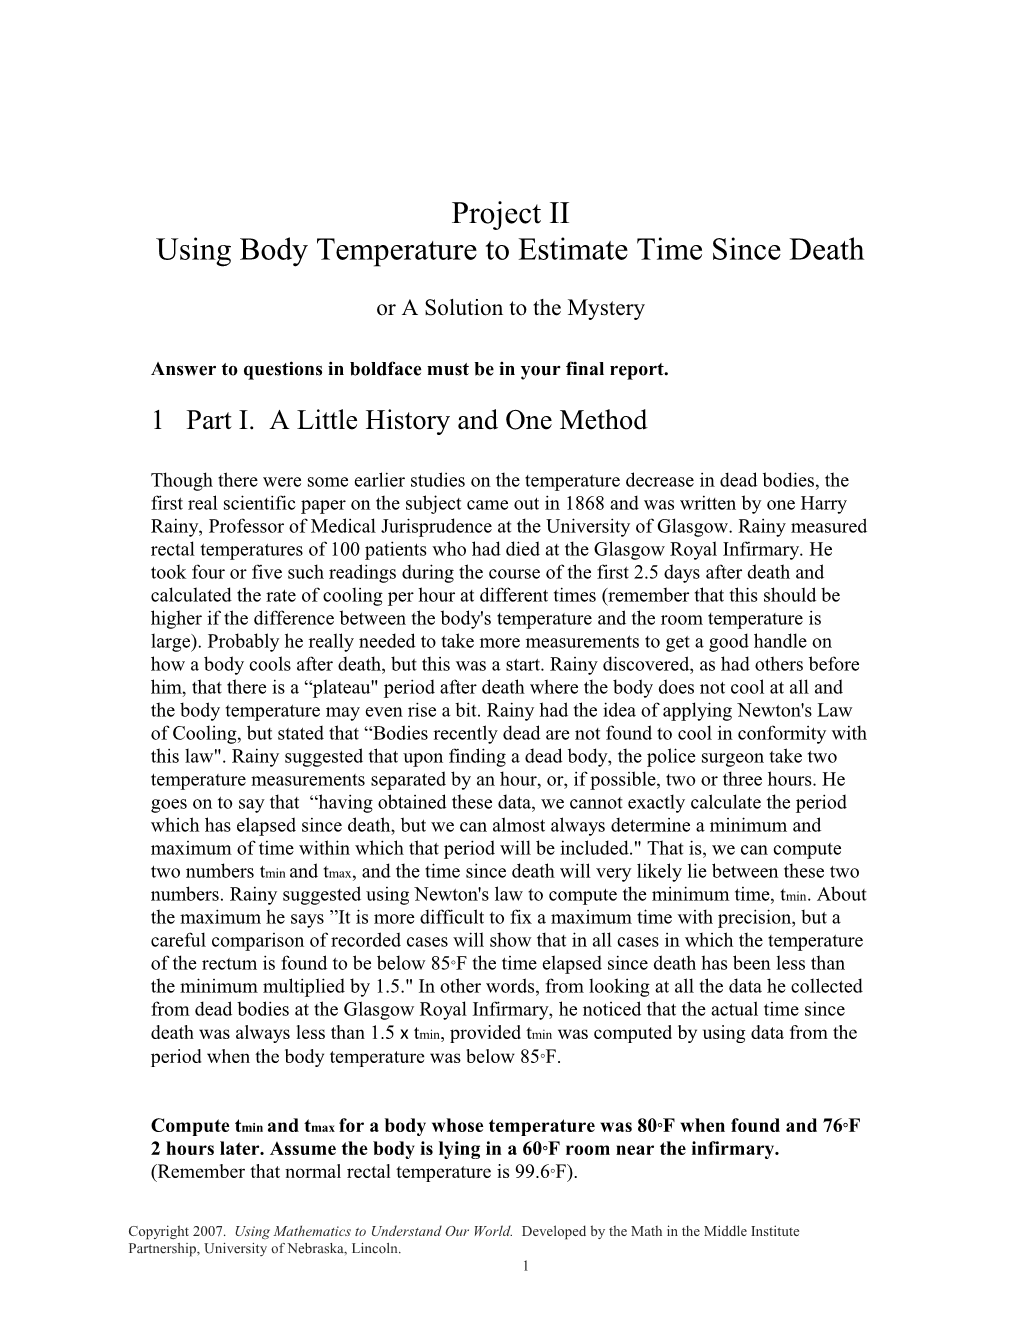 Using Body Temperature to Estimate Time Since Death